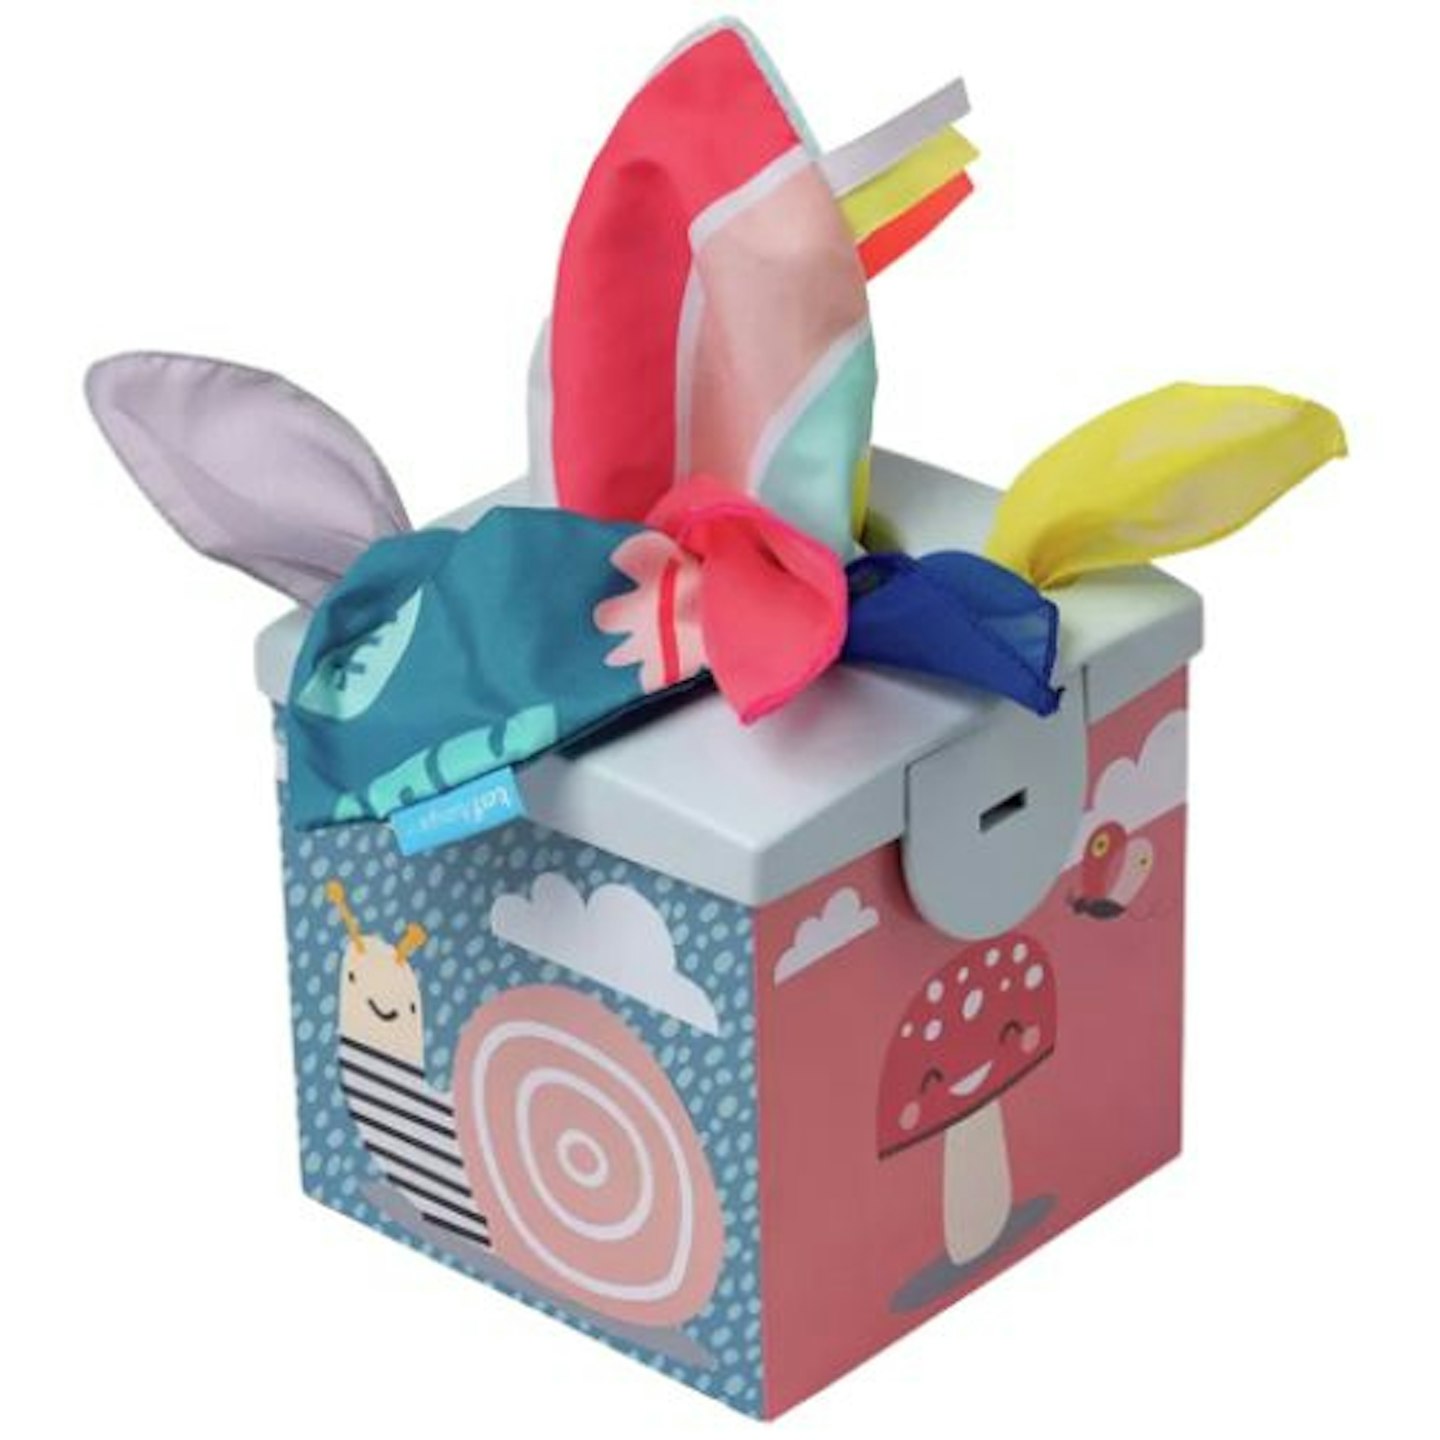 https://images.bauerhosting.com/affiliates/sites/12/2022/11/Taf-Toys-Kimmy-Koala-Wonder-Tissue-Box.jpg?auto=format&w=1440&q=80